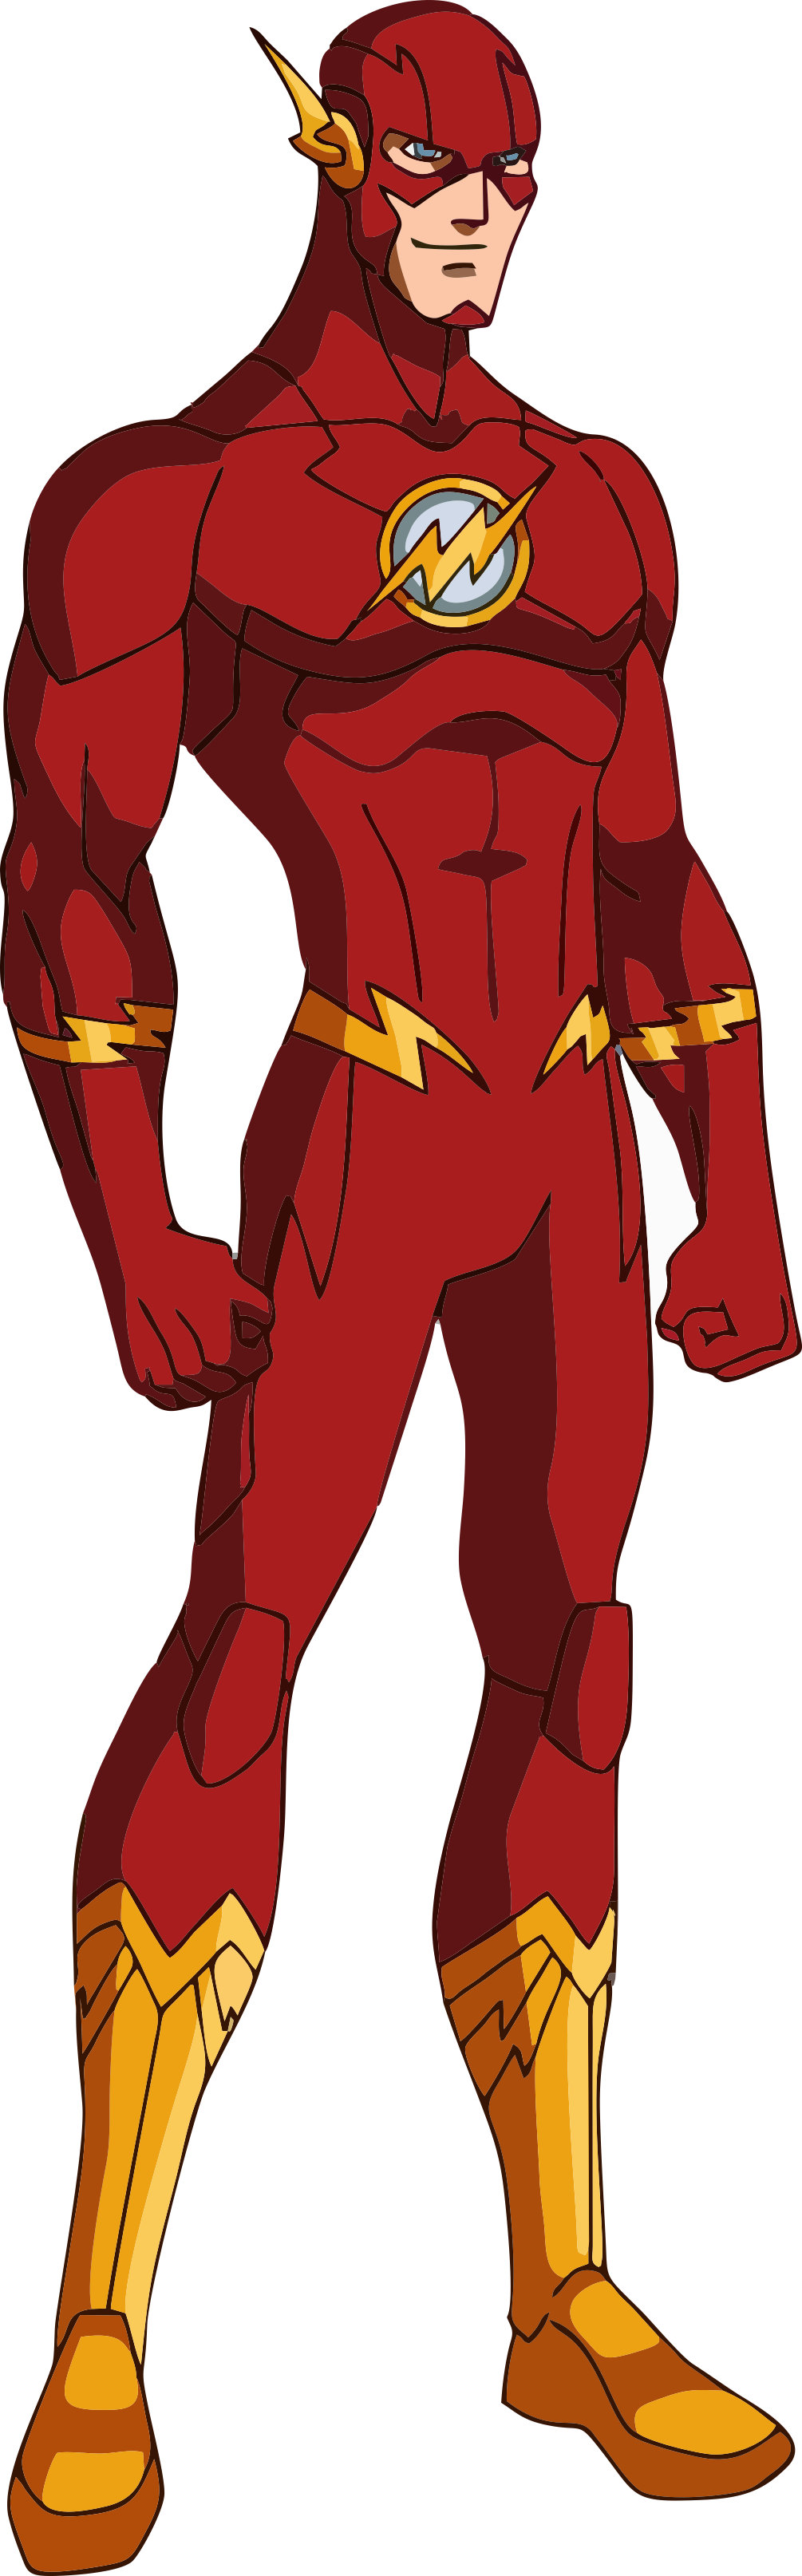 Flash pic. Бэтмен/Уолли Уэст. Флеш герой Марвел. Flash Супергерой Flash. Флаш КПНГ.